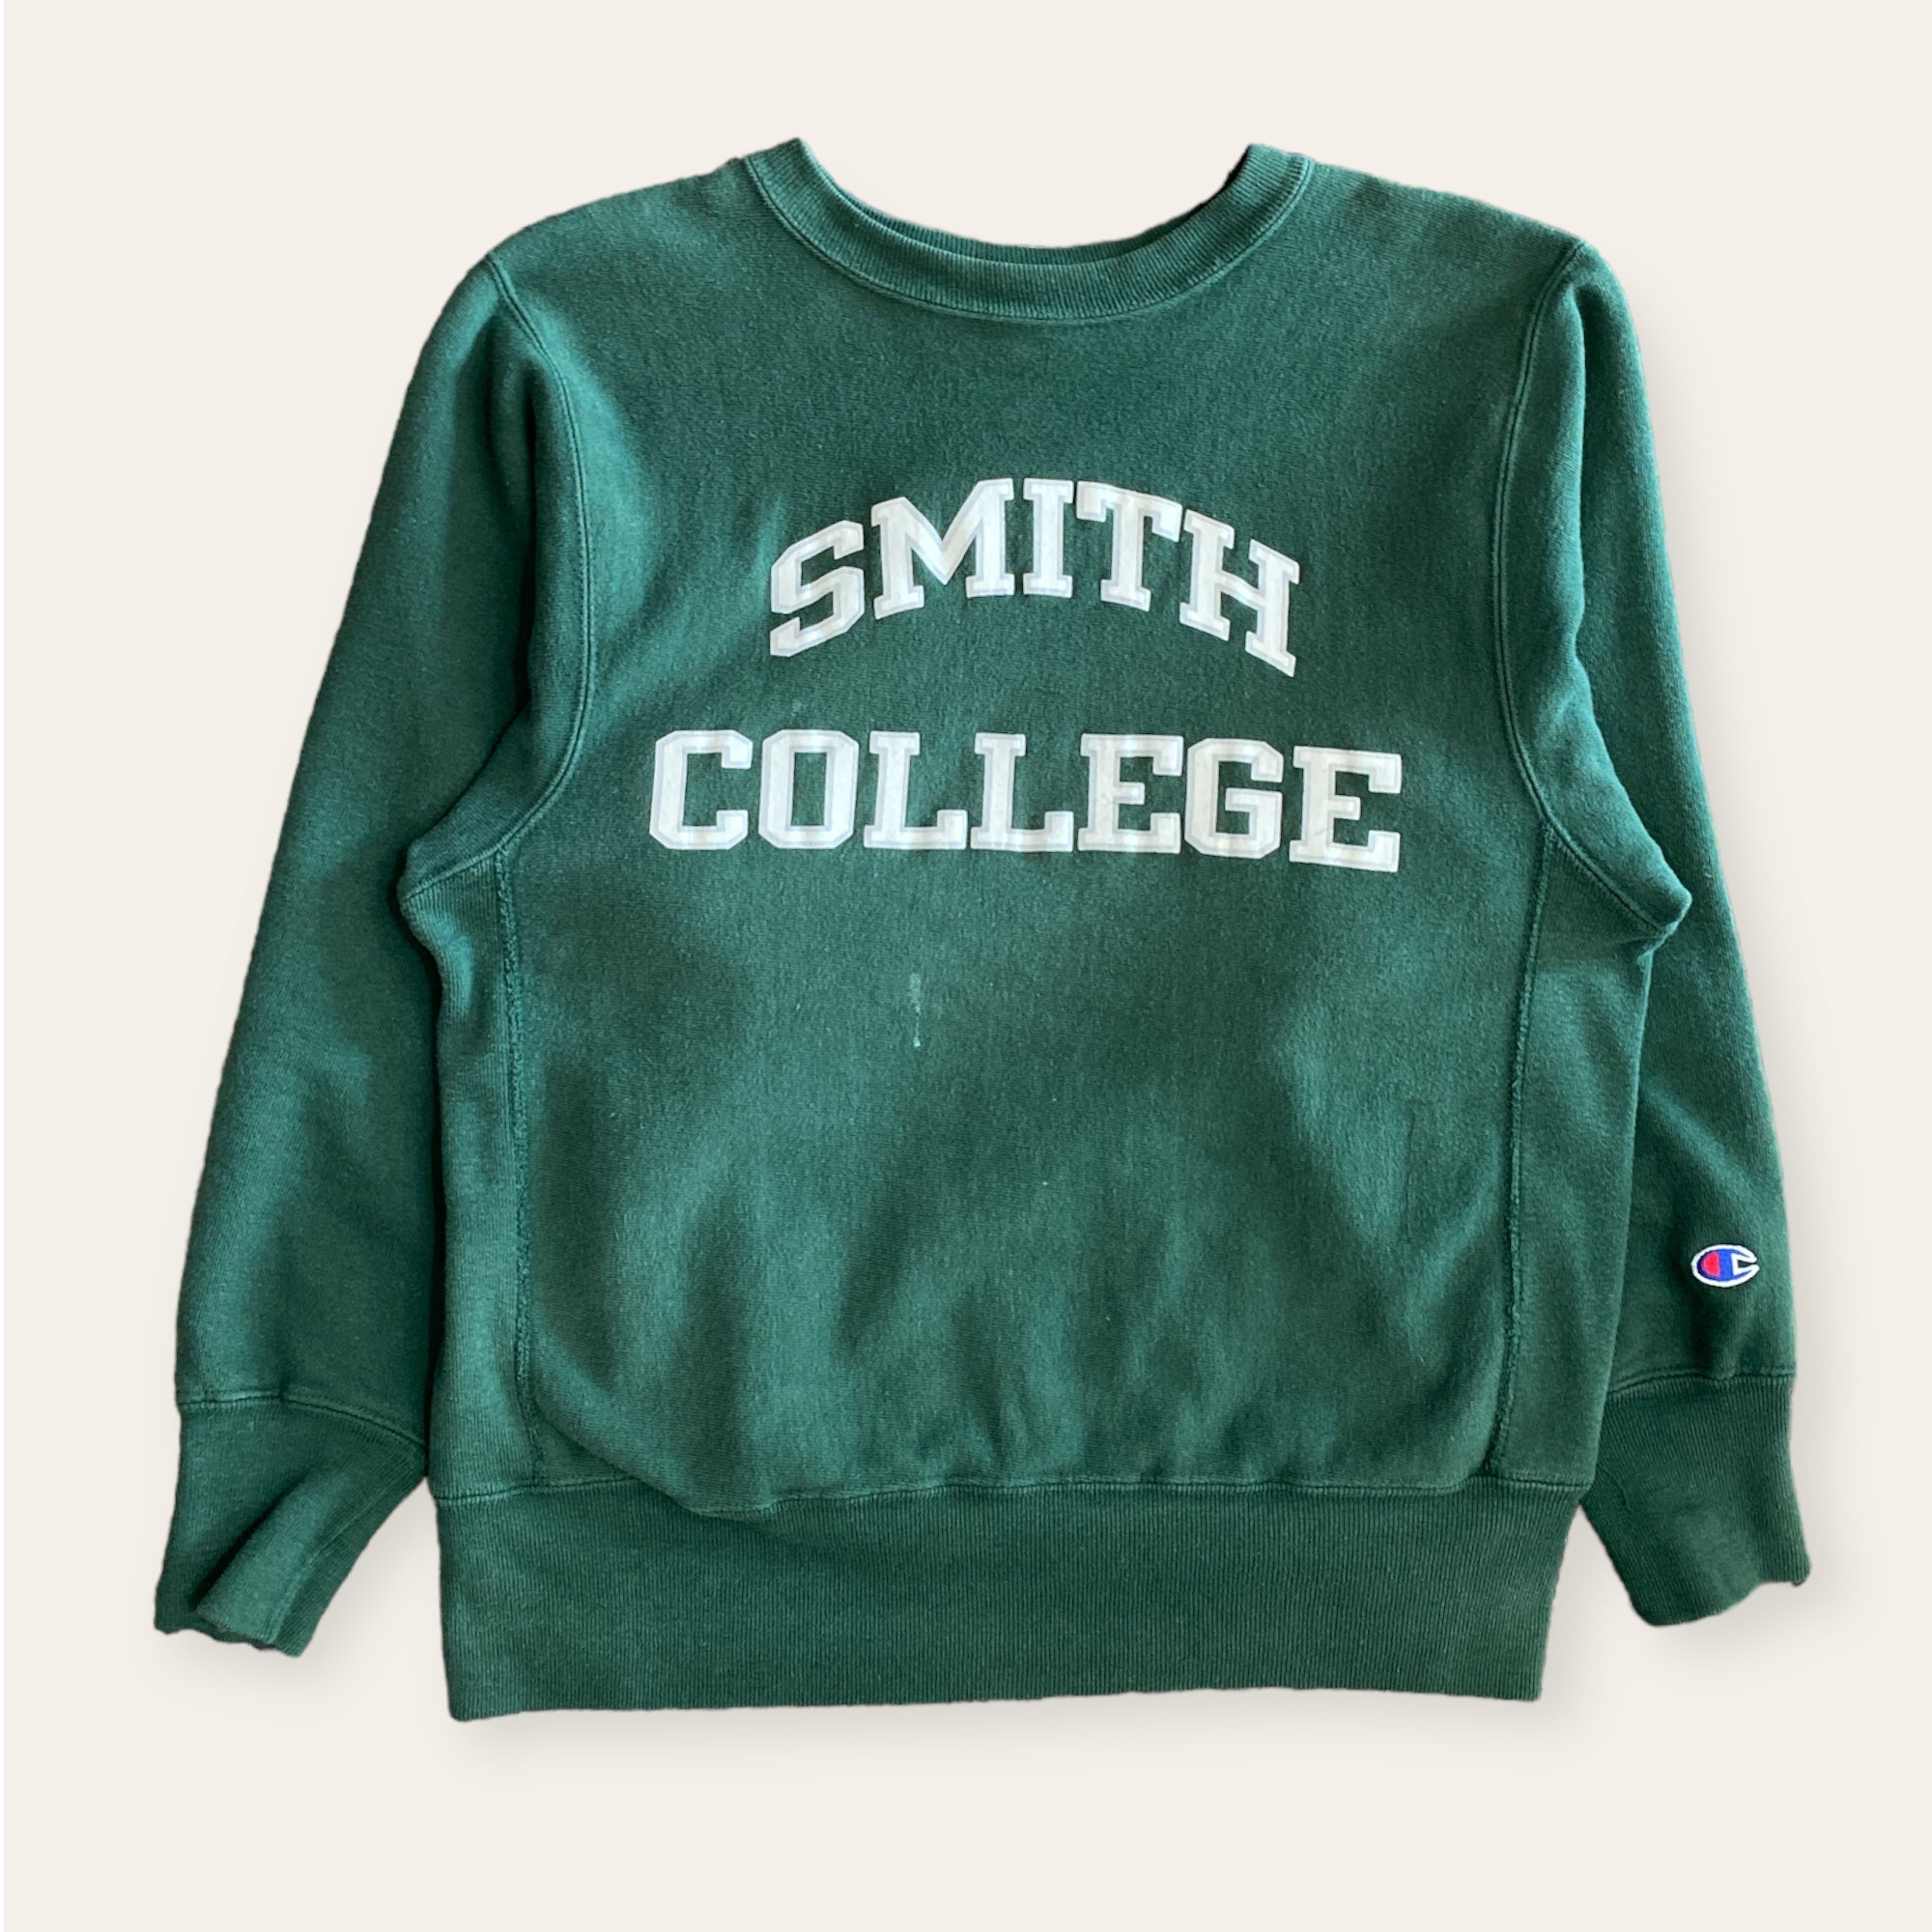 90s Champion RW Smith College Sweater Size M